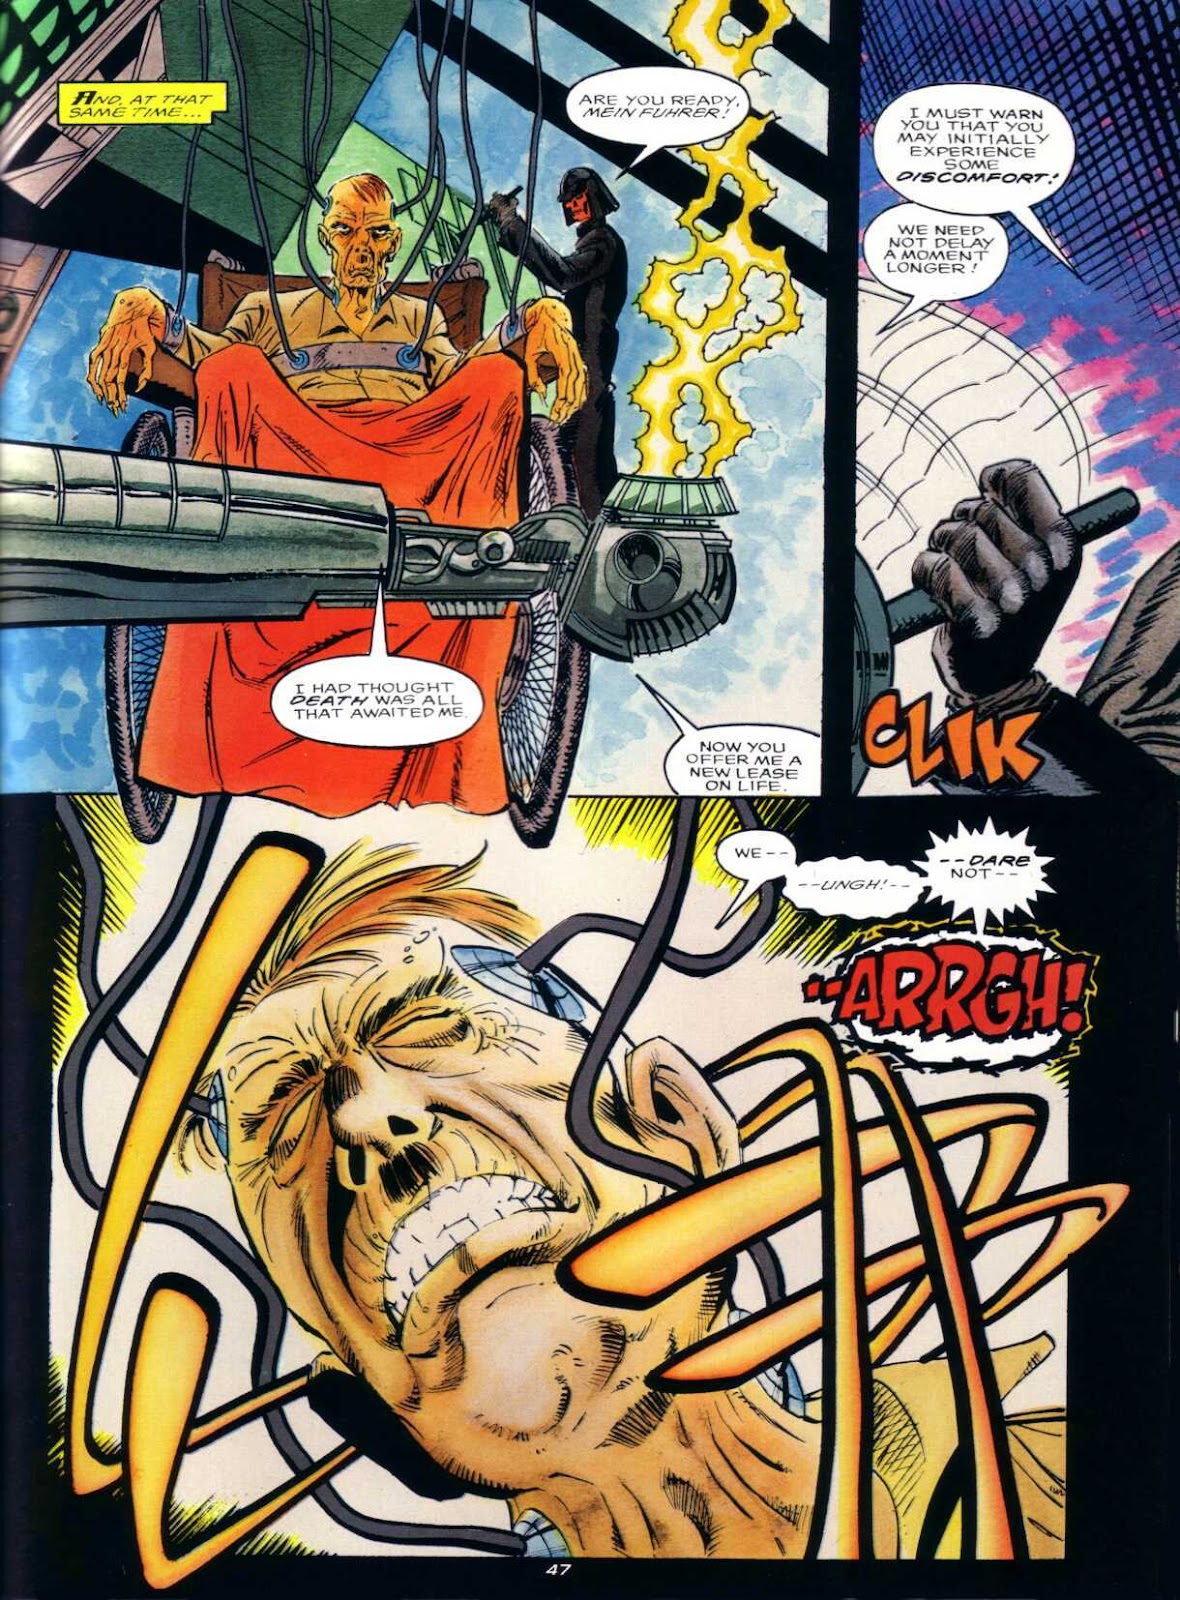 Marvel Graphic Novel issue 66 - Excalibur - Weird War III - Page 46